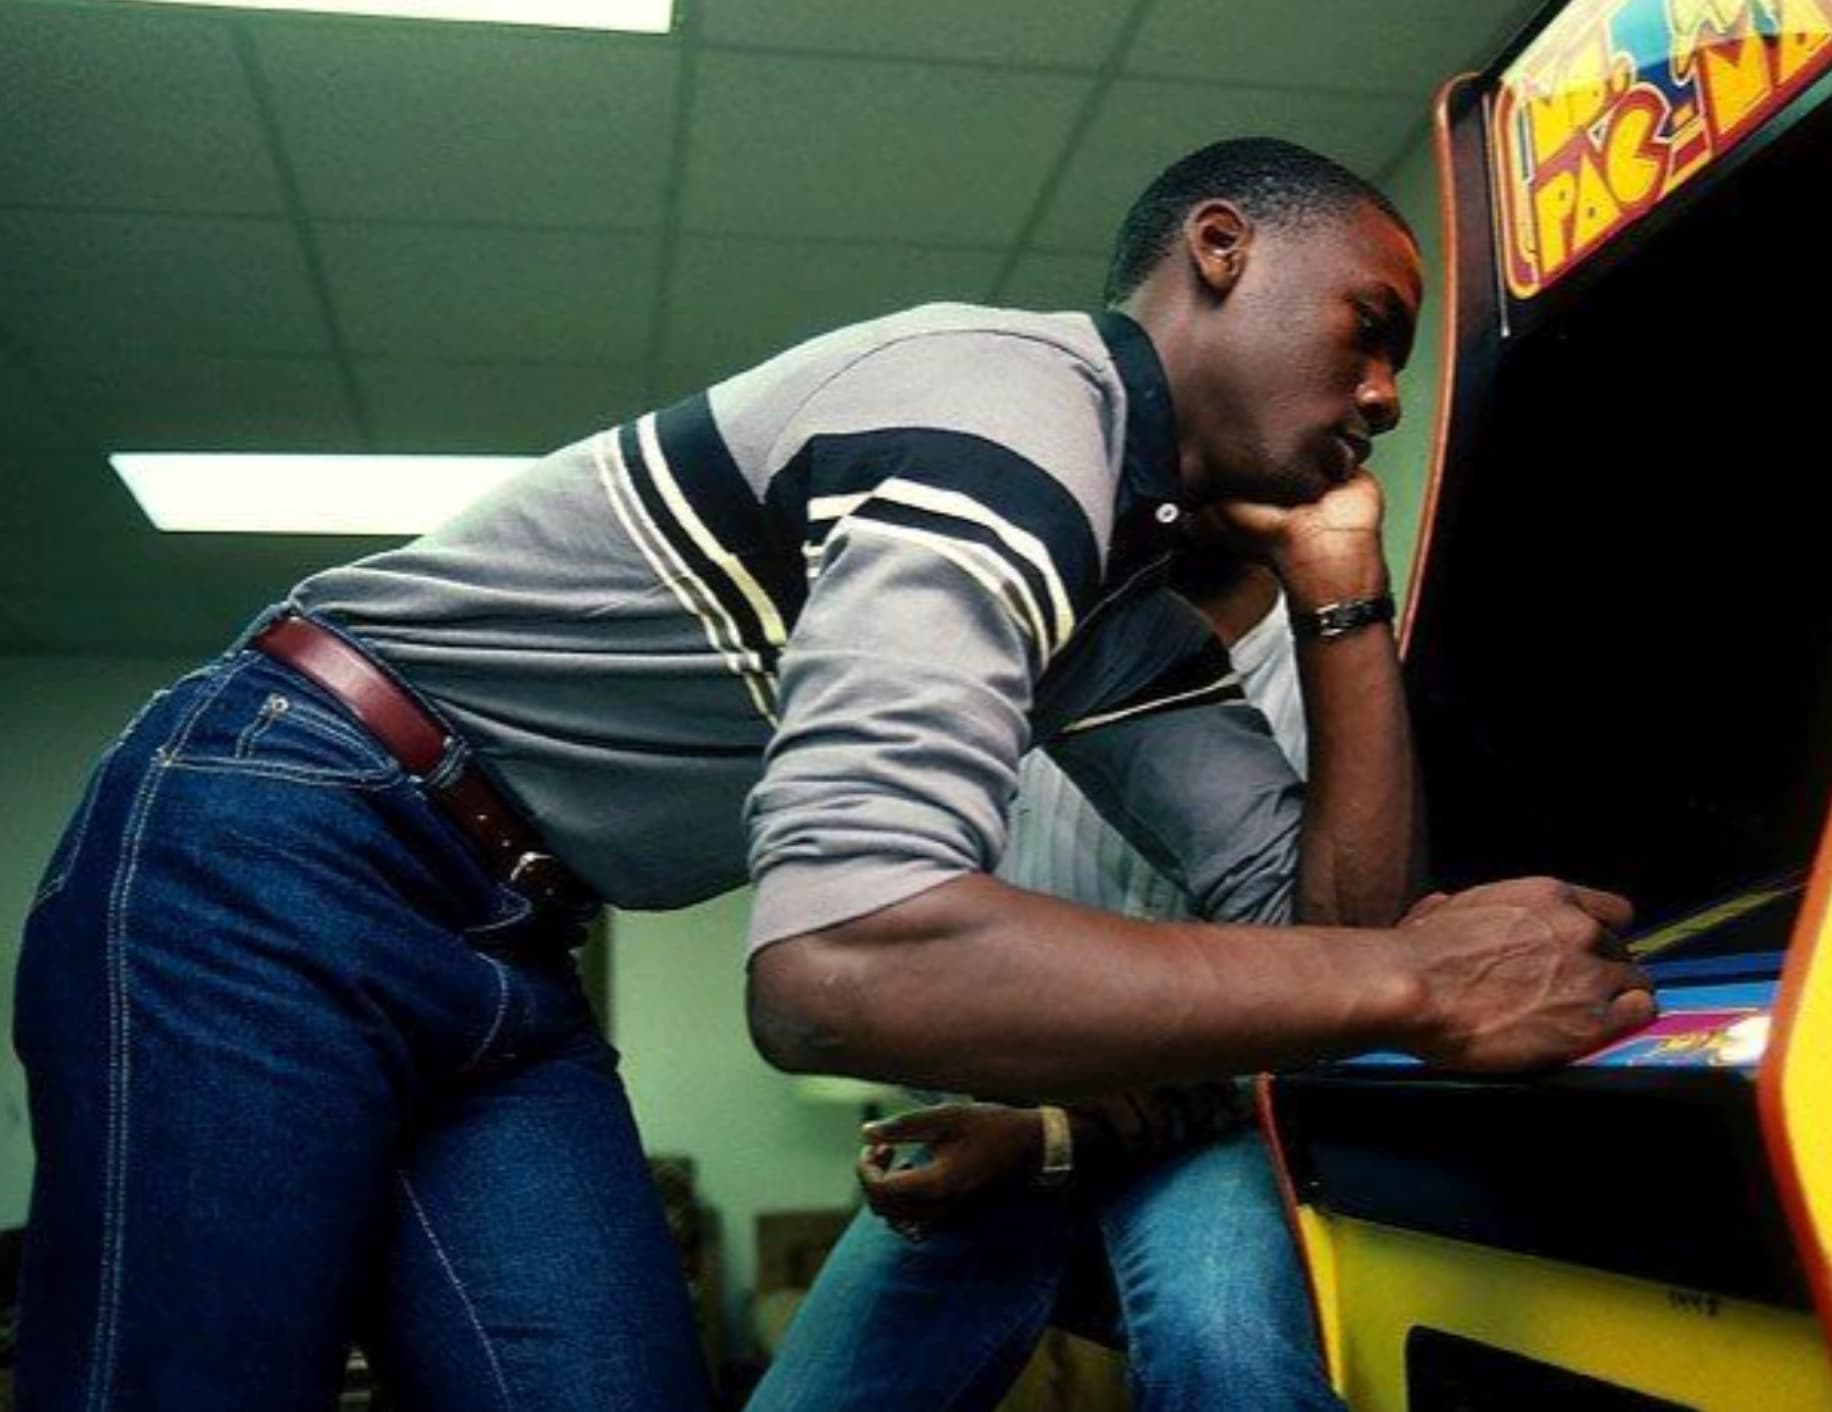 “Michael Jordan playing Pac-Man at UNC in 1983.”